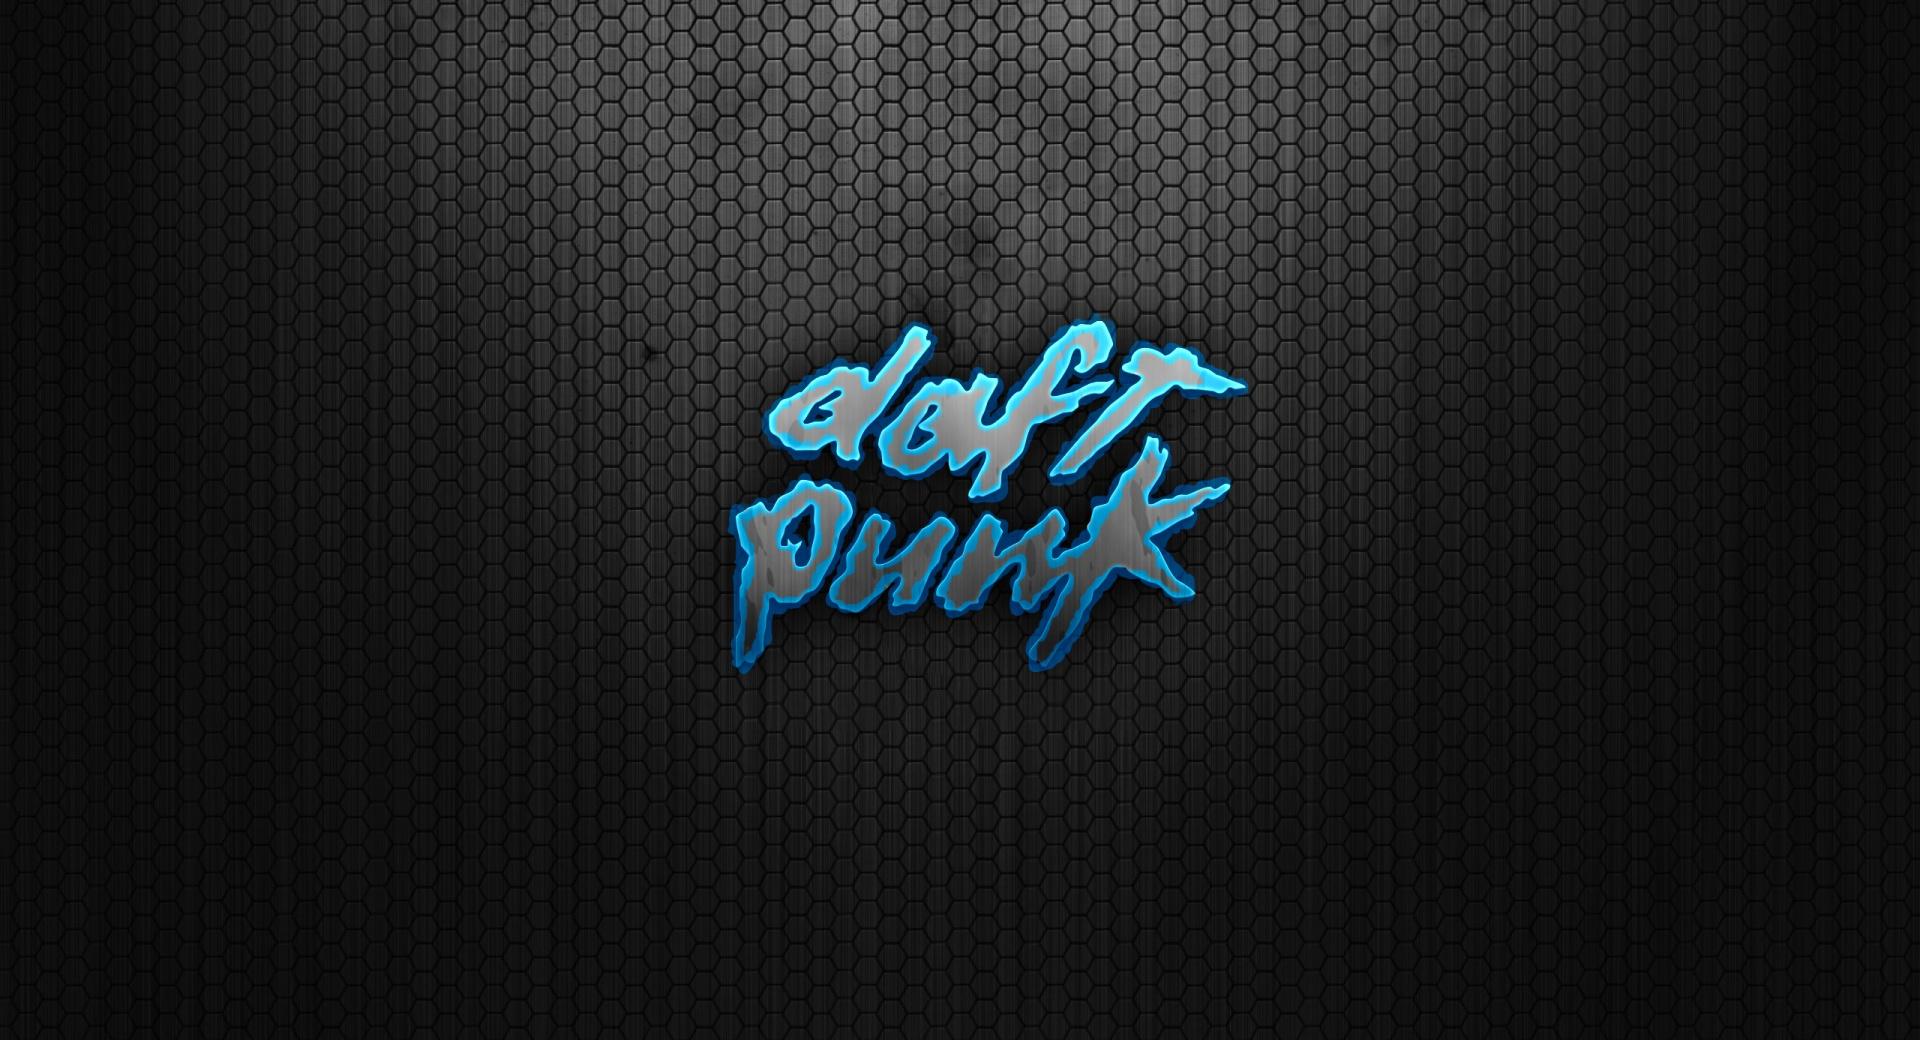 Daft Punk Logo at 1024 x 1024 iPad size wallpapers HD quality